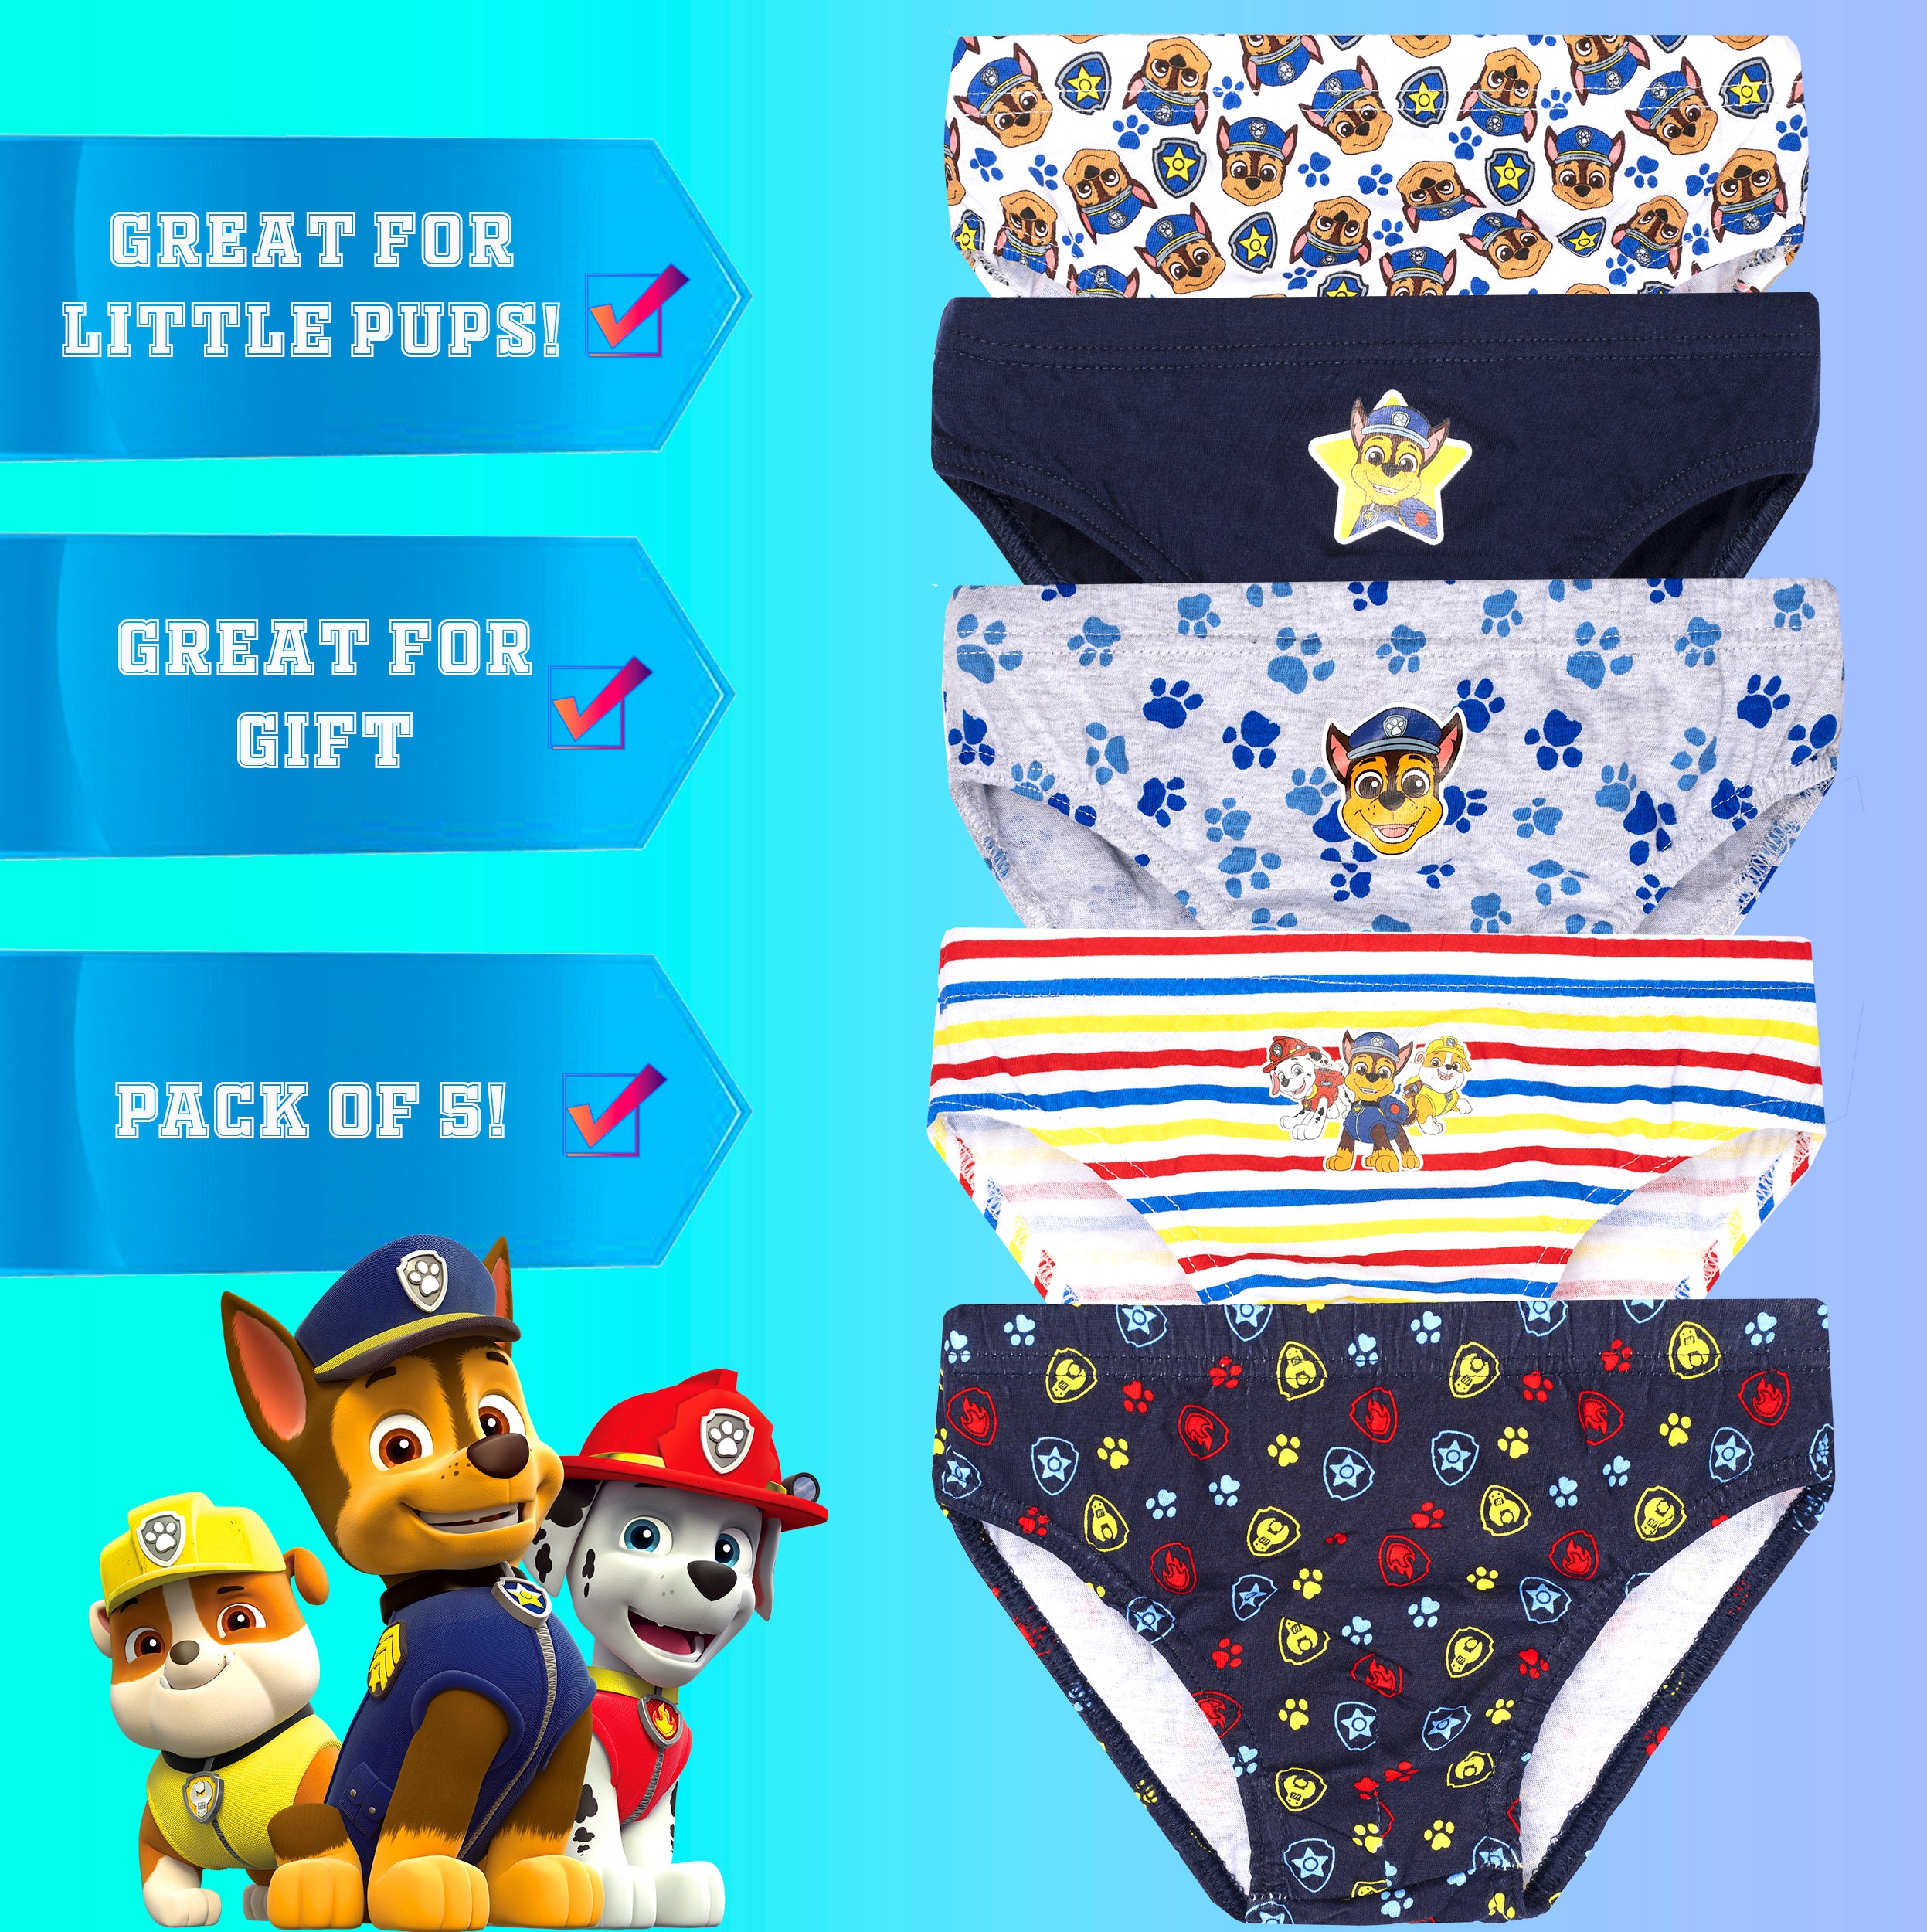 Paw Patrol 3 Pack Underwear, Shop Today. Get it Tomorrow!